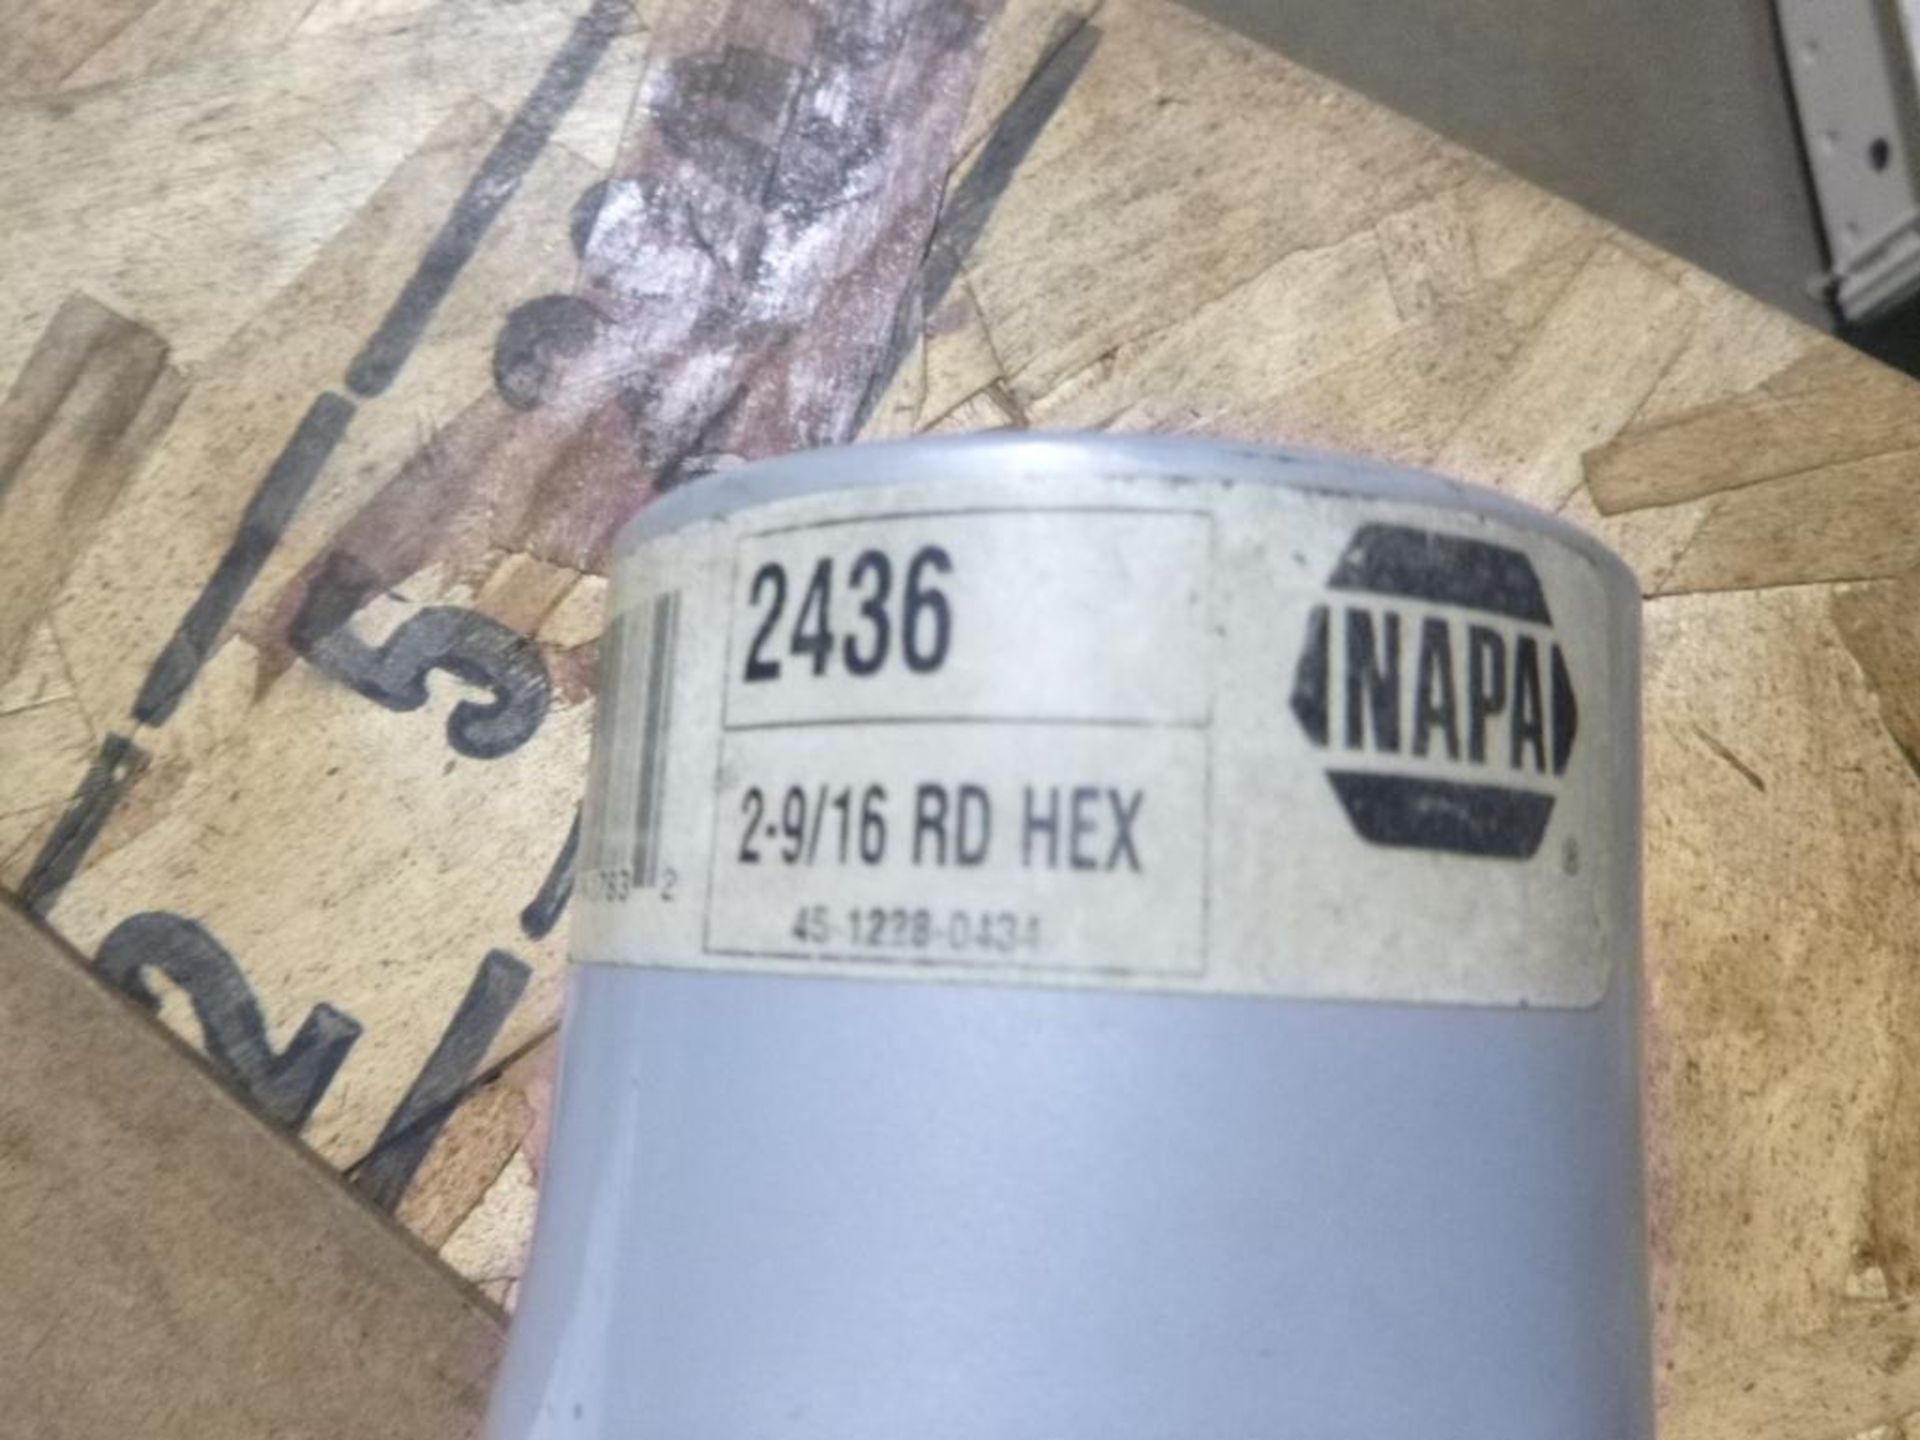 2 9/16 in. Axle Nut Socket, Dodge, Napa 2436 - Image 3 of 3